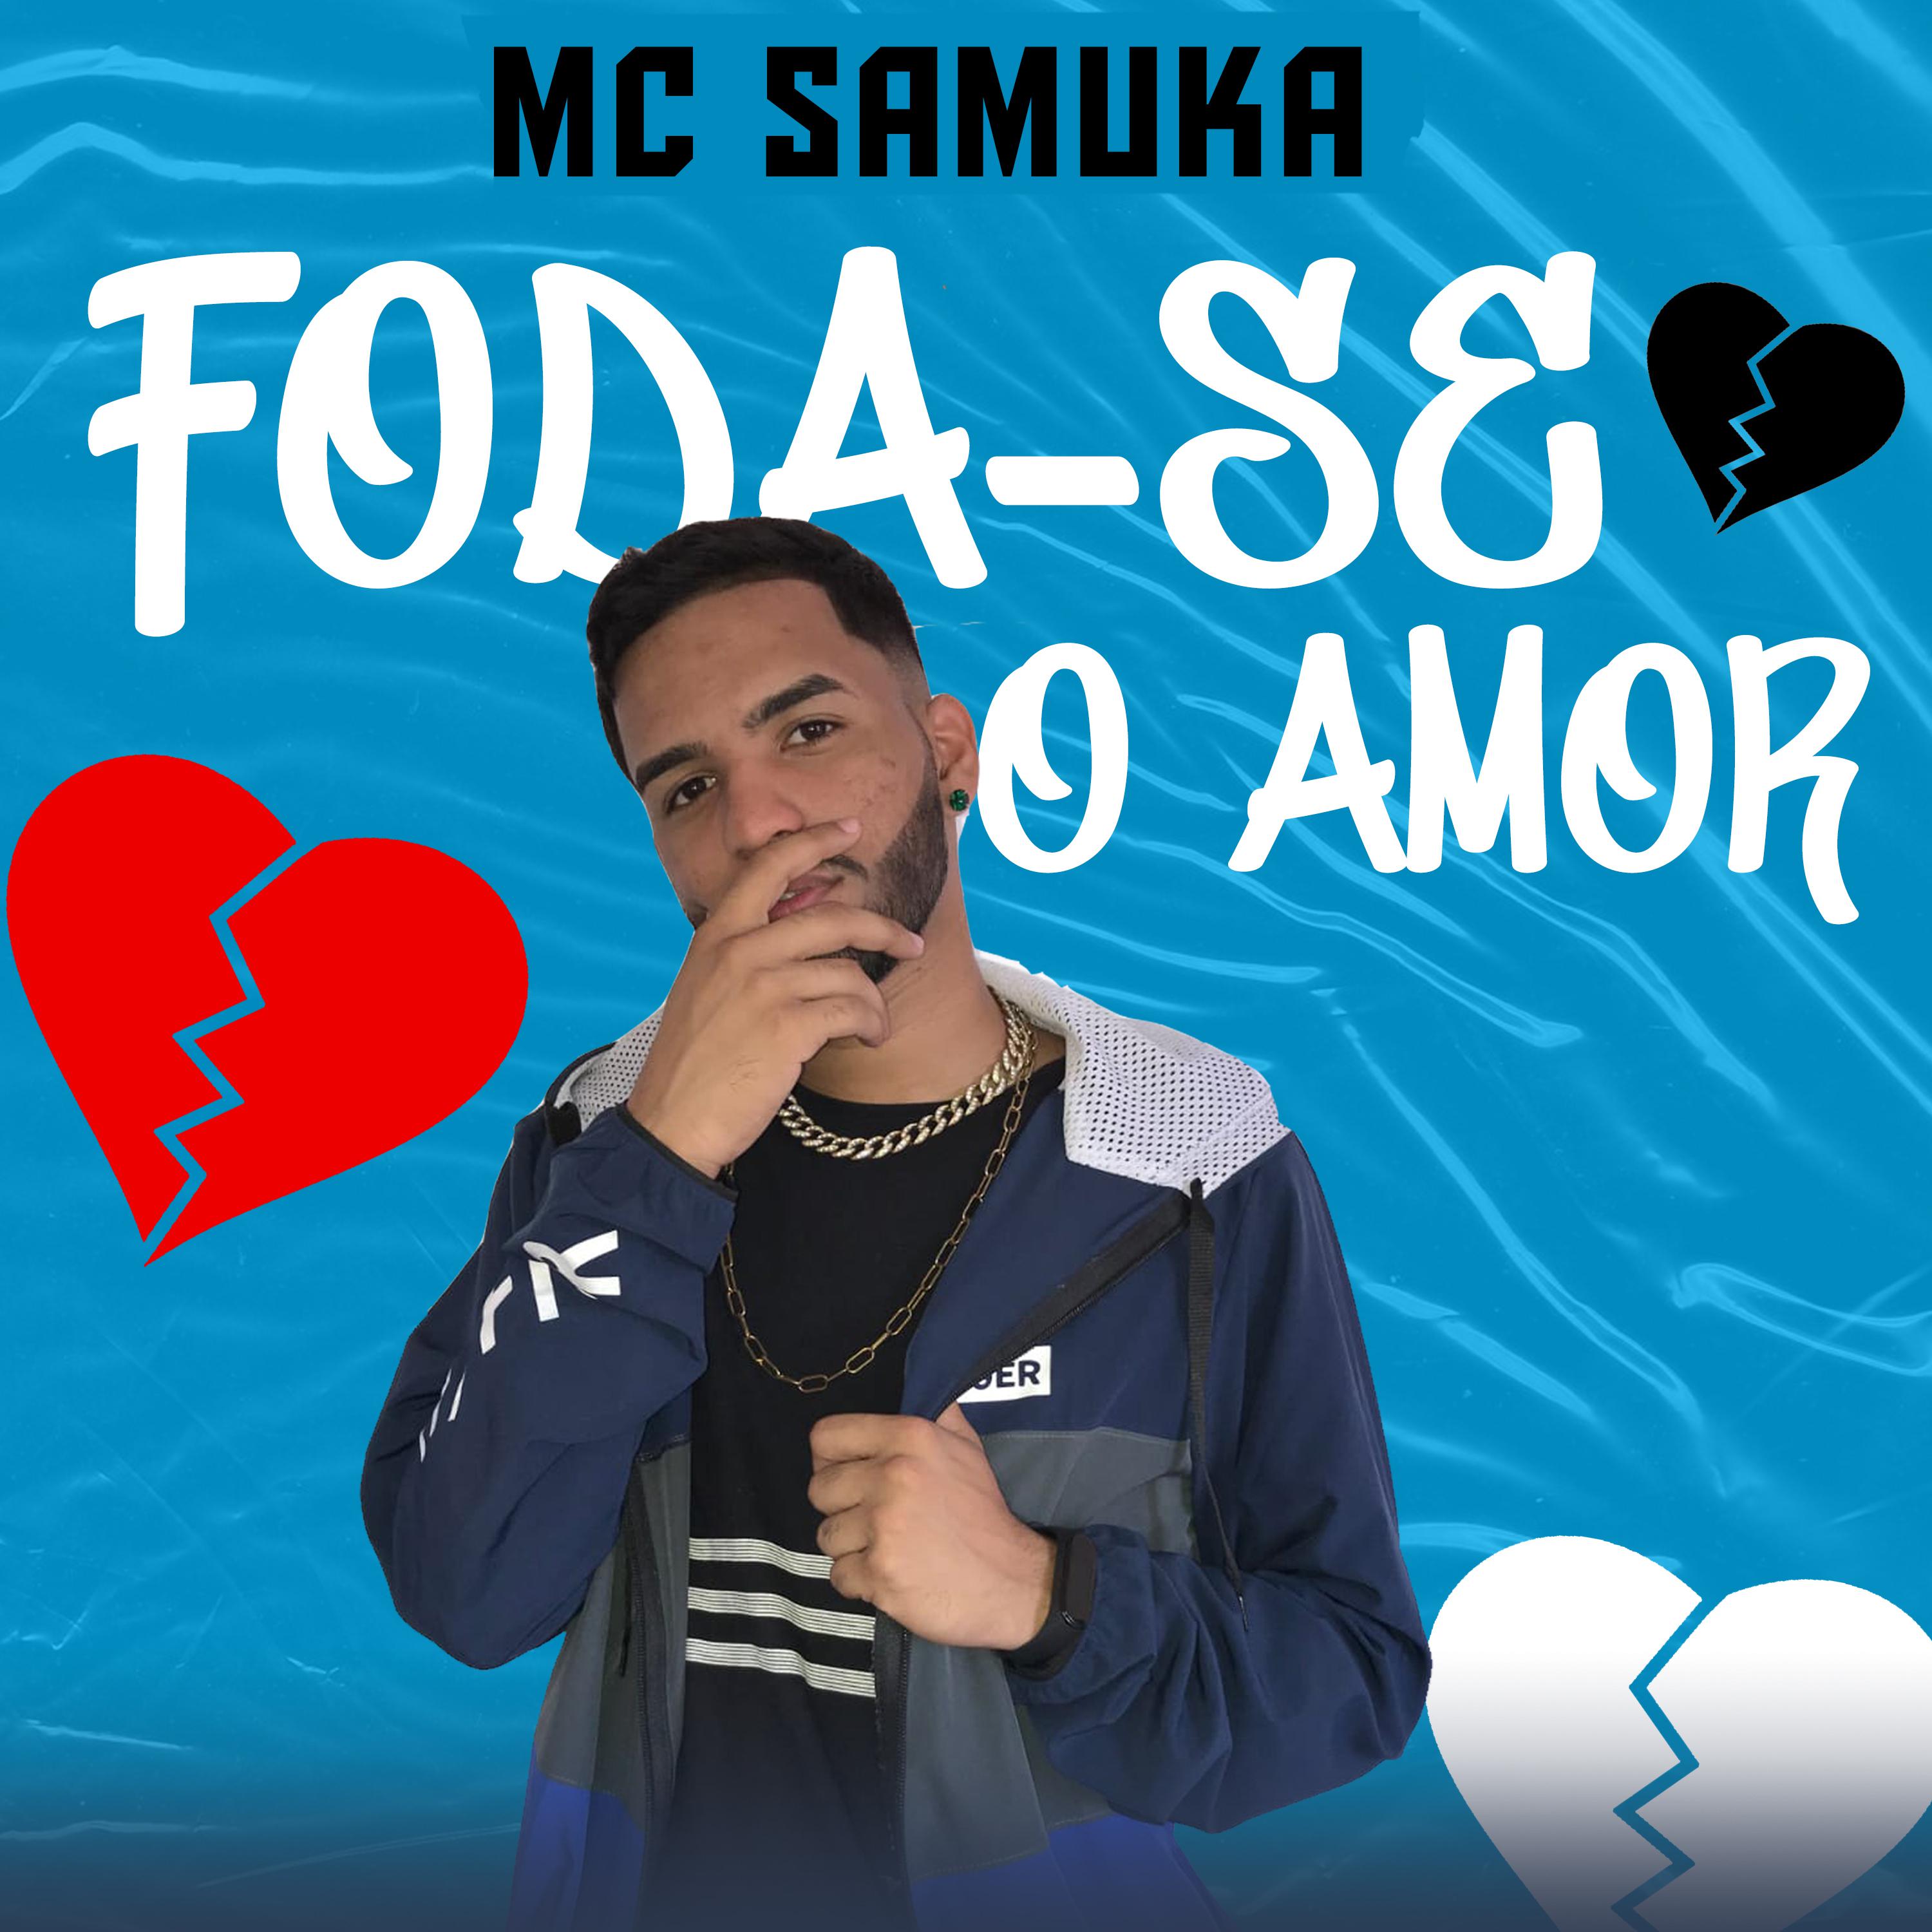 Постер альбома Foda-Se o Amor